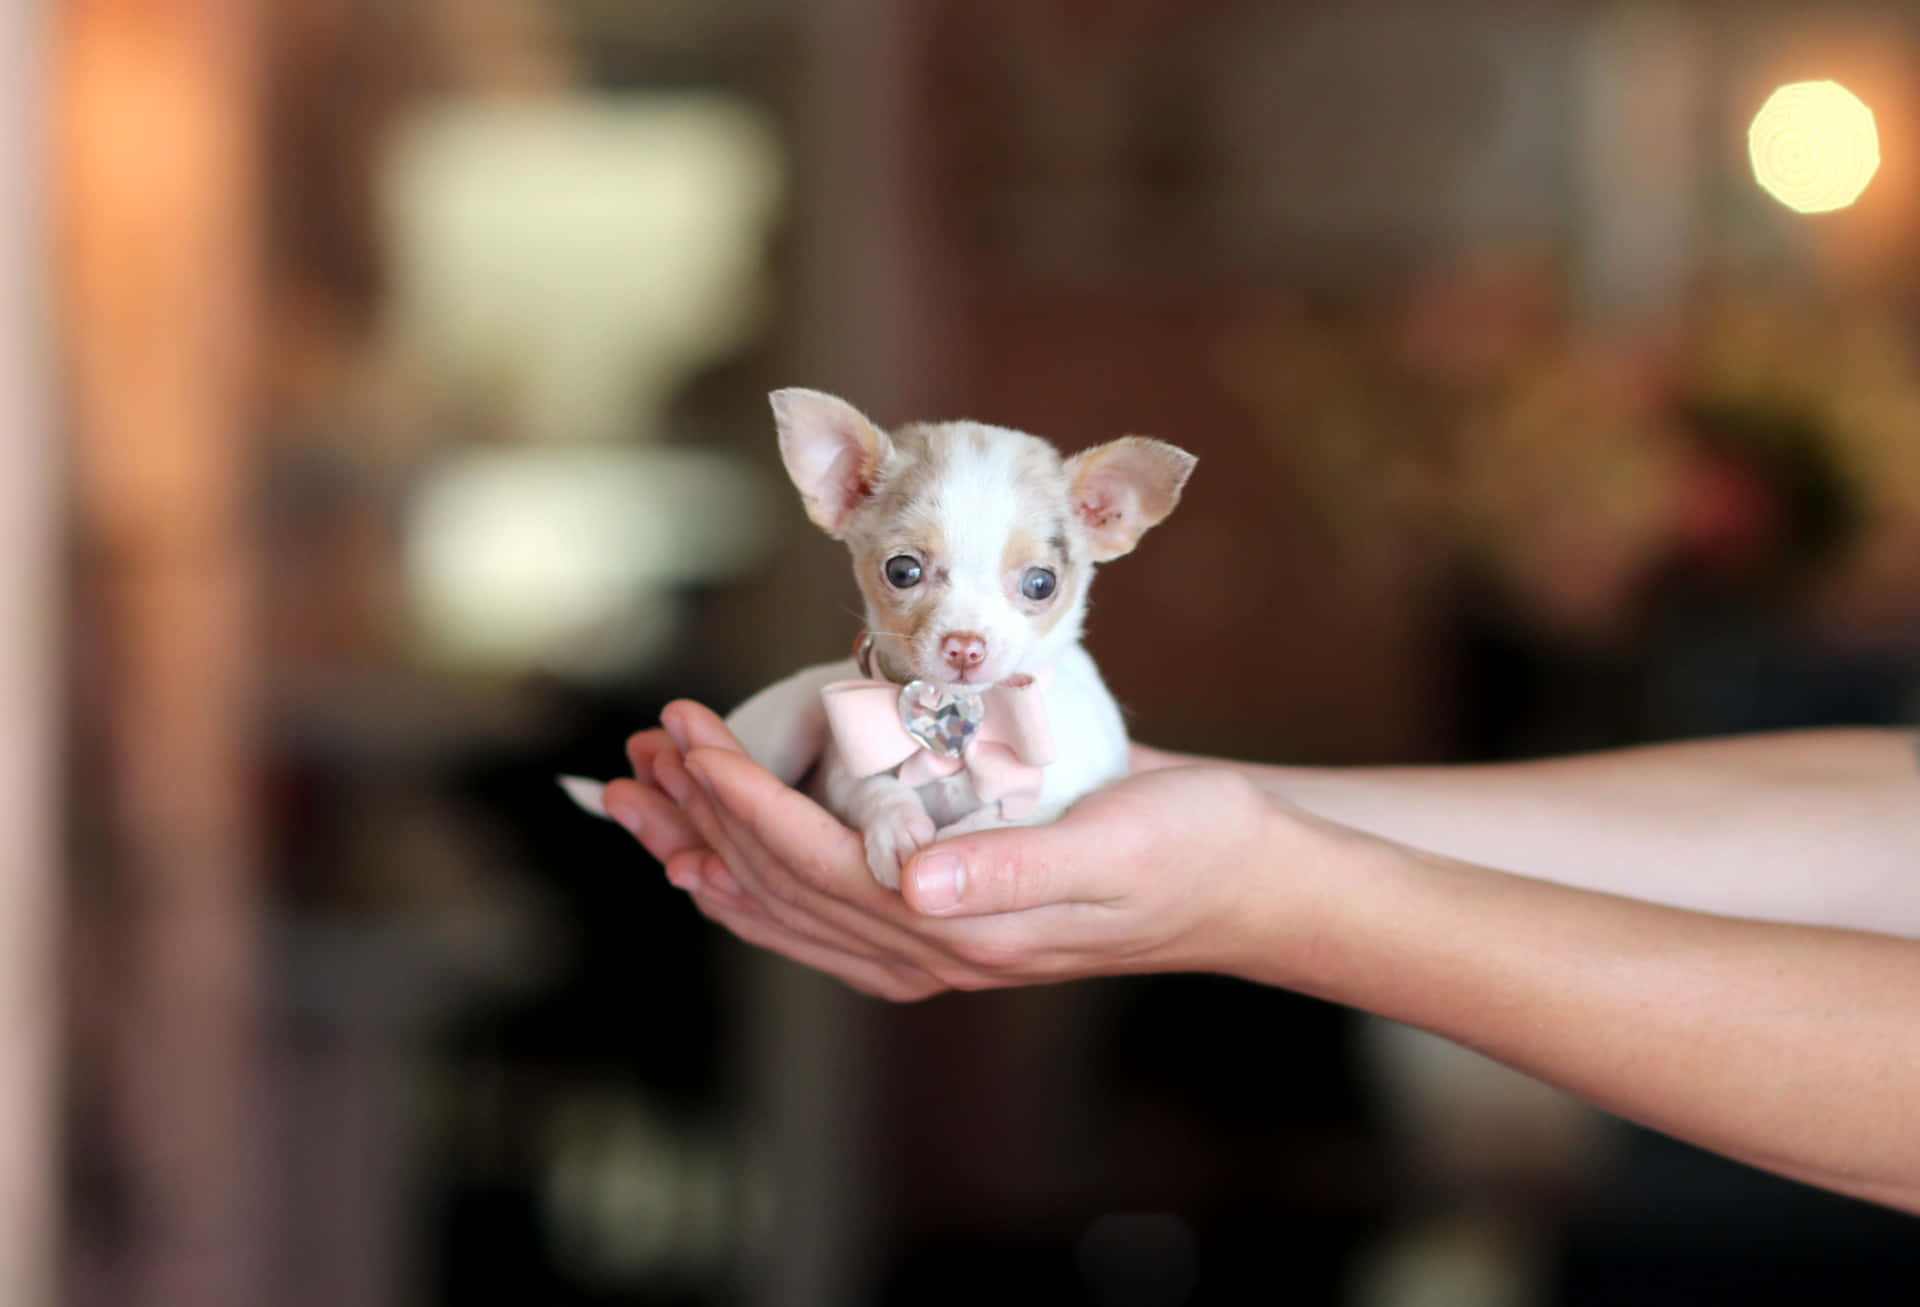 A Teacup Chihuahua enjoying a puppy treat